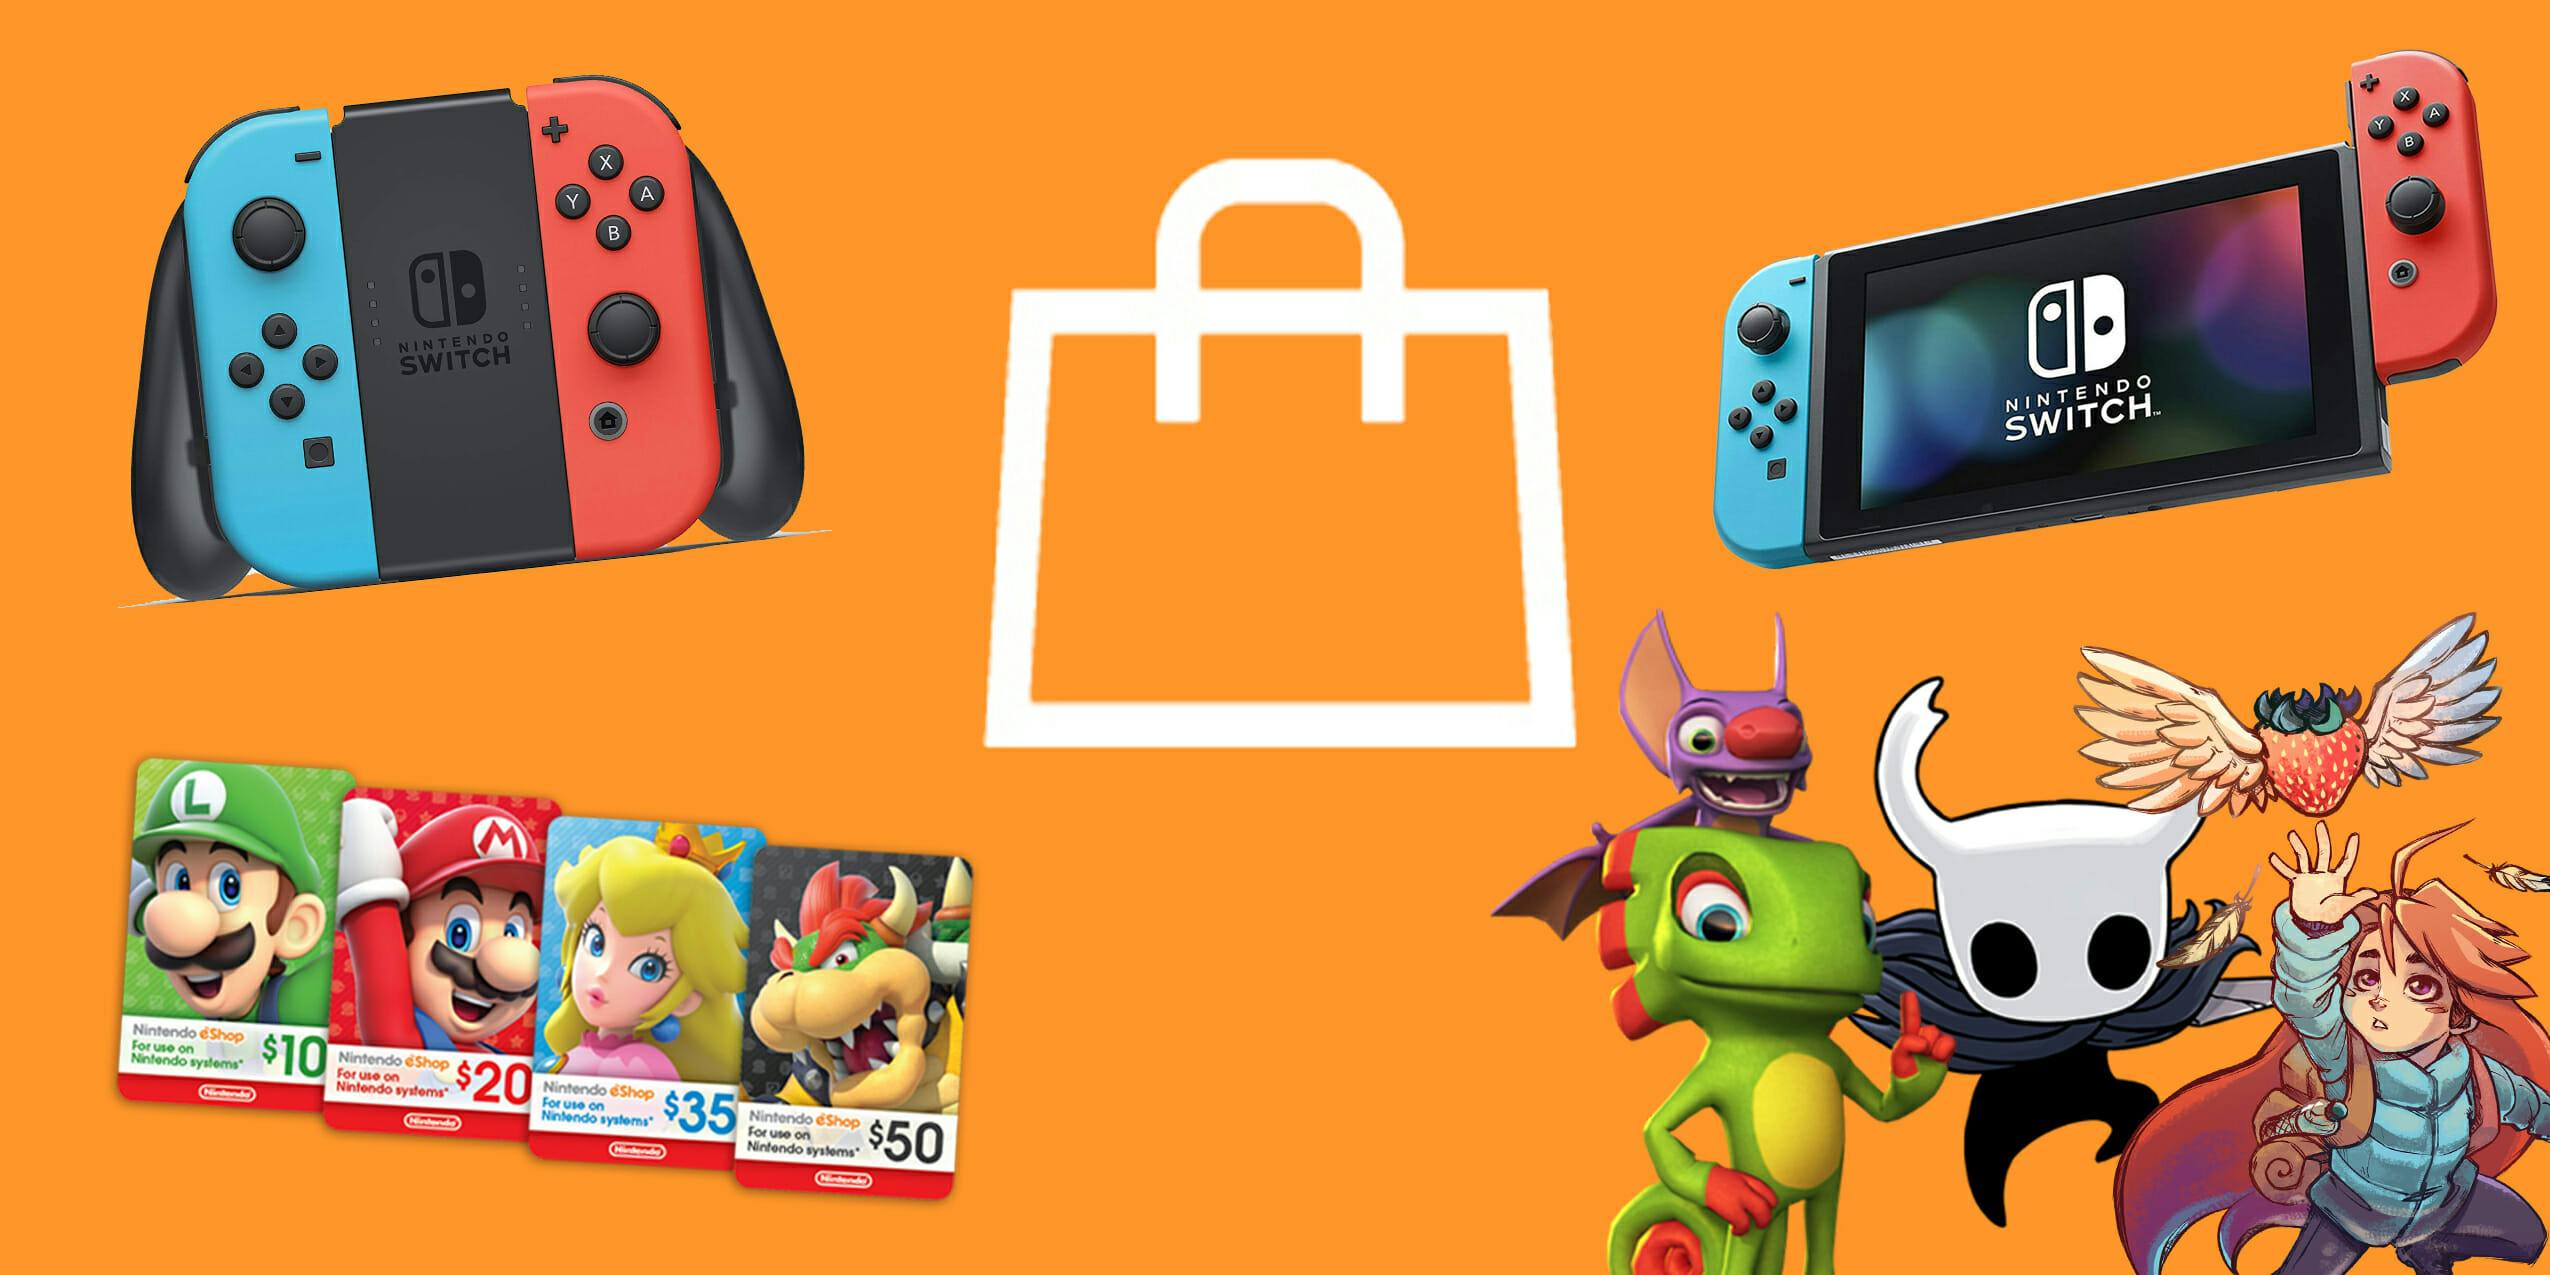 mørkere Forenkle skruenøgle Nintendo Switch eShop: 10 Essential Games and Accessories to Buy